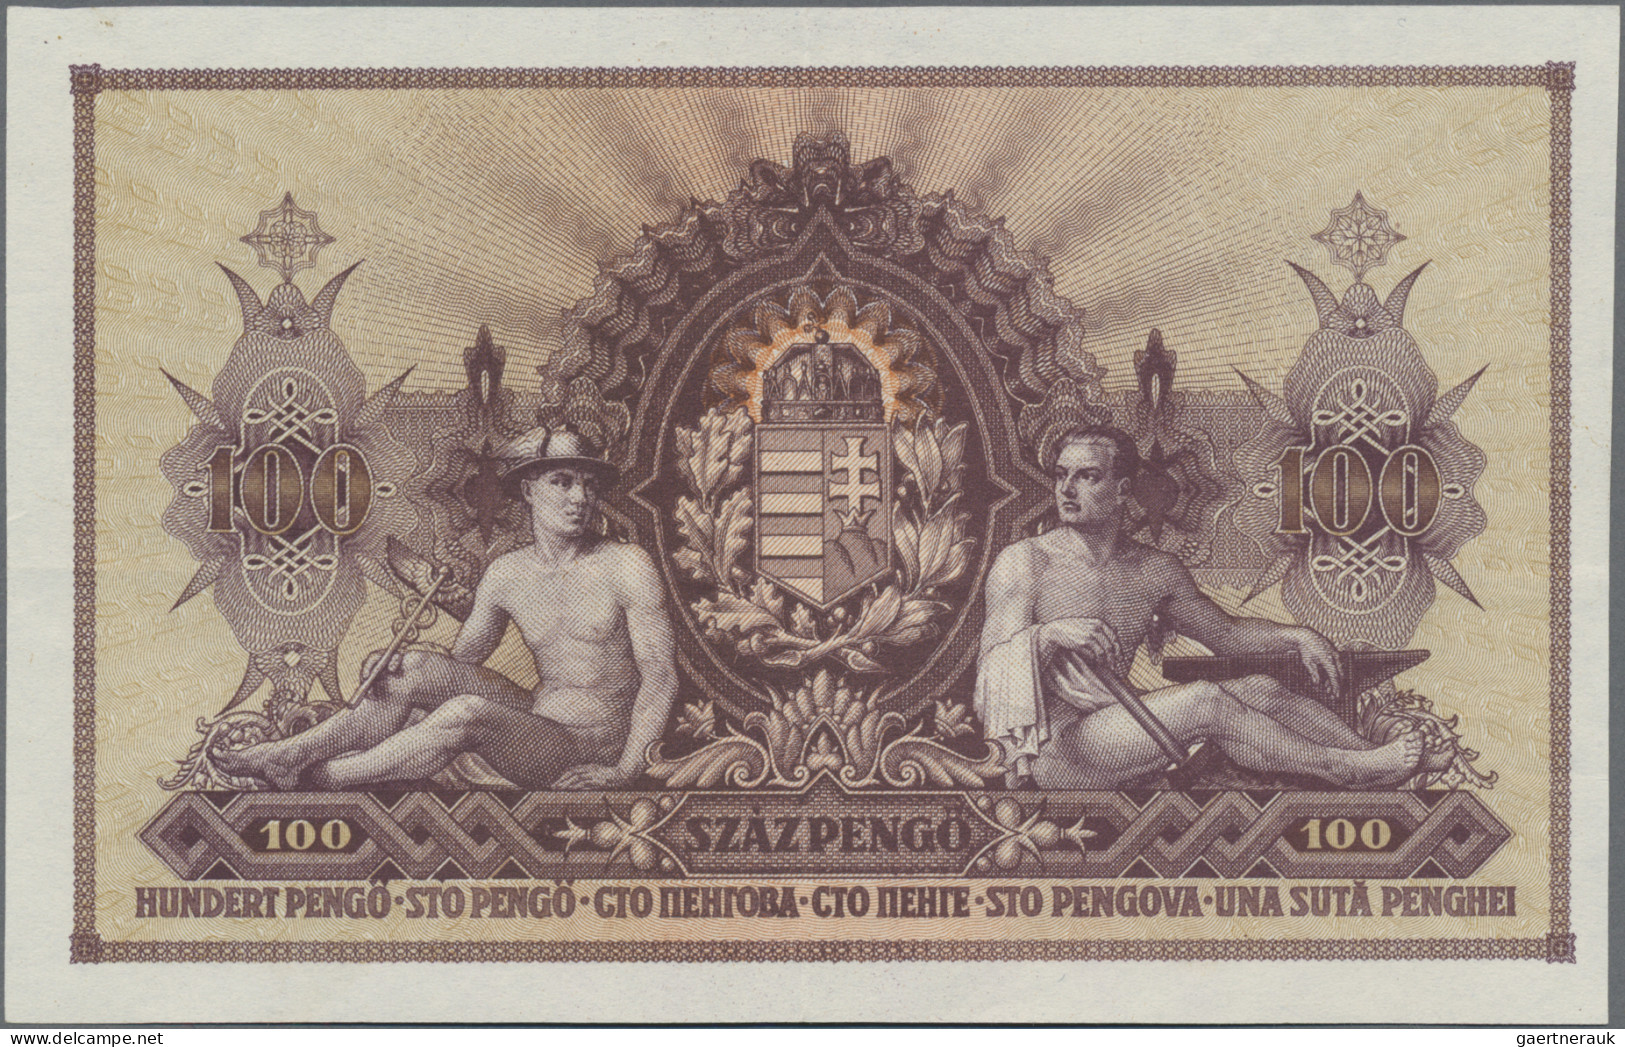 Hungary: Magyar Nemzeti Bank 100 Pengö 1943, P.115, Unissued Series Without Seri - Ungheria